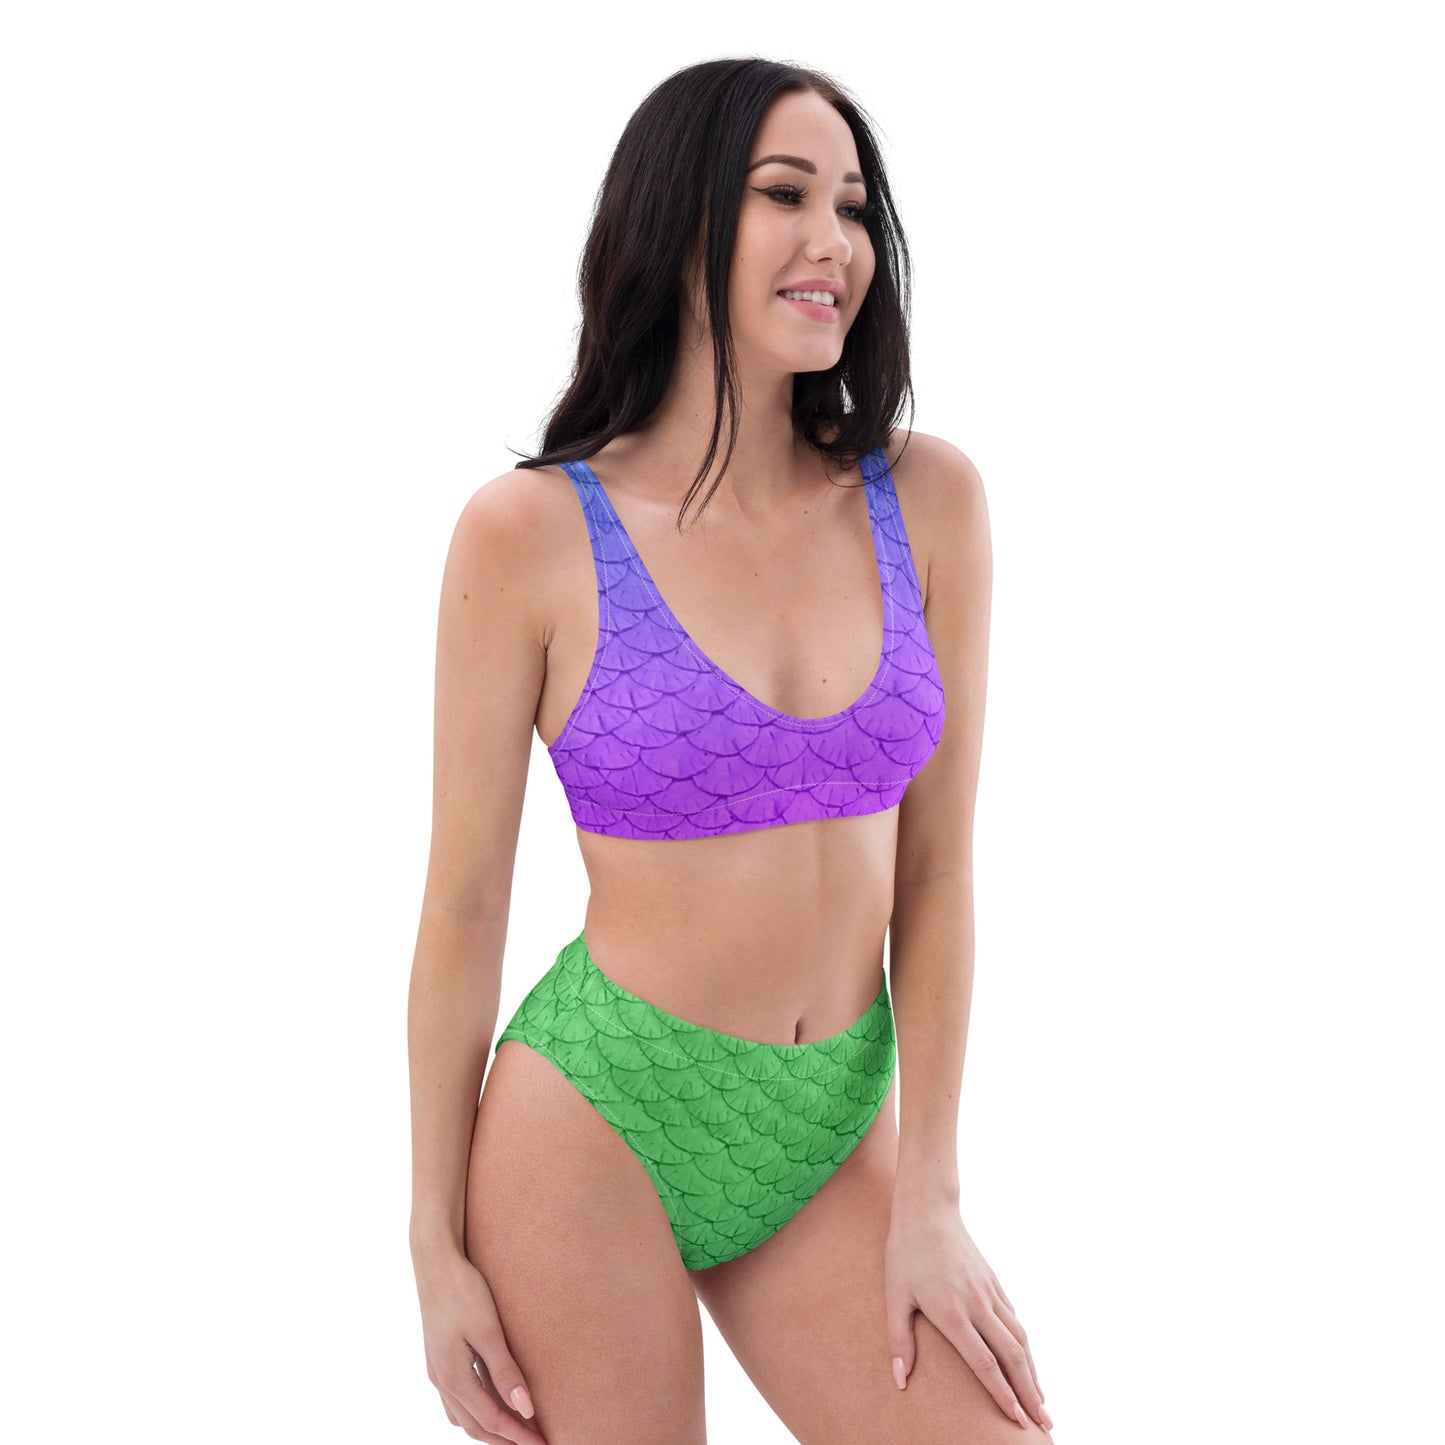 Mermaid princess Inspired Recycled high-waisted bikini